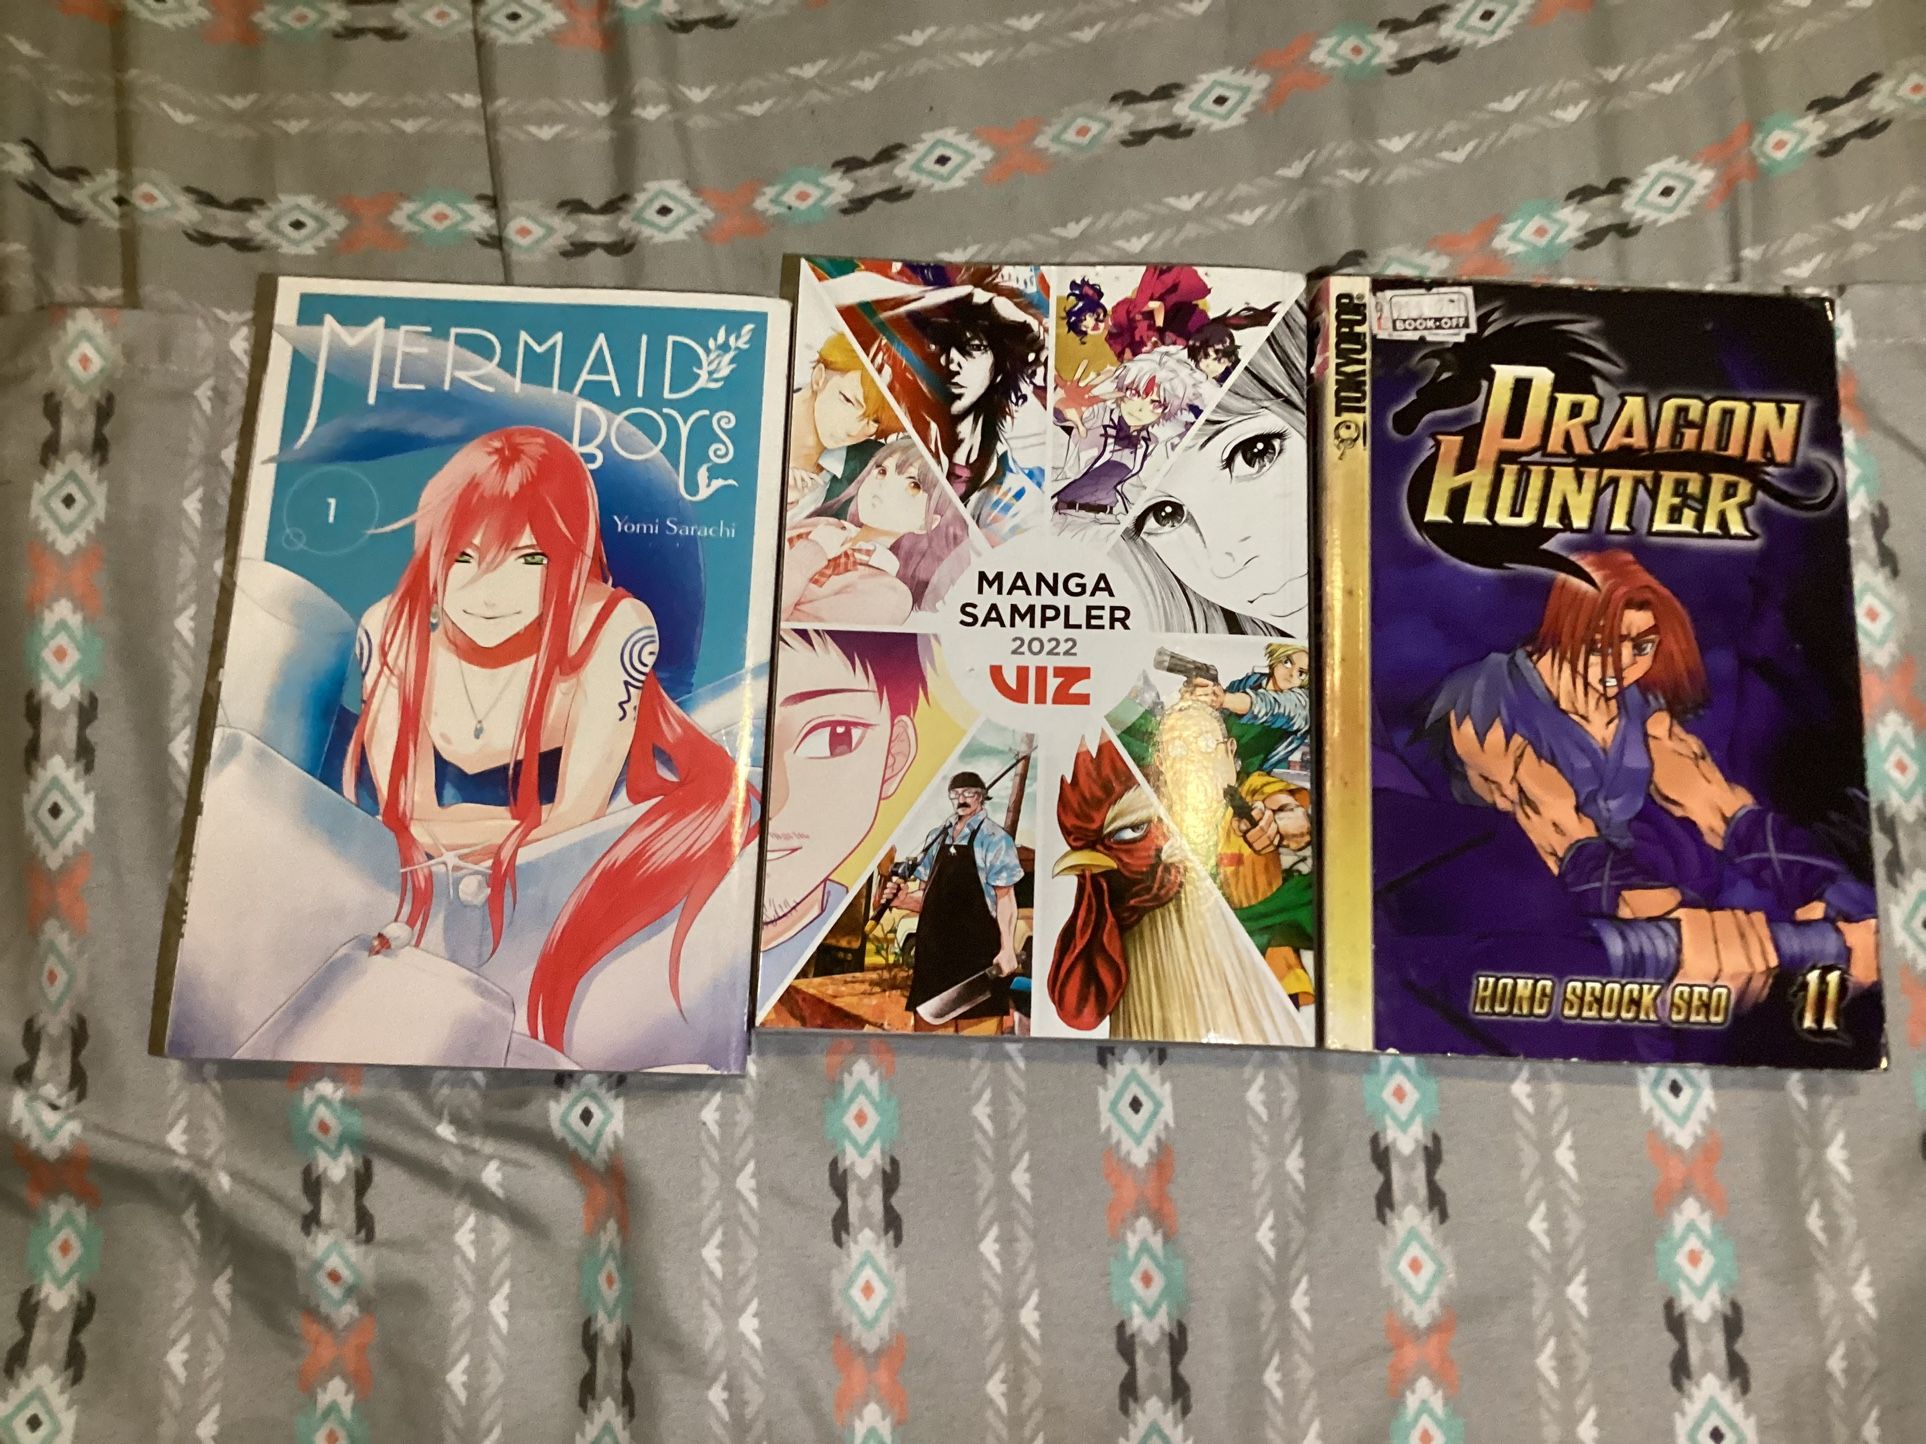 Dragon Hunter #11,Manga sampler 2022 and Mermaid Boy #1 English manga lot of 3 